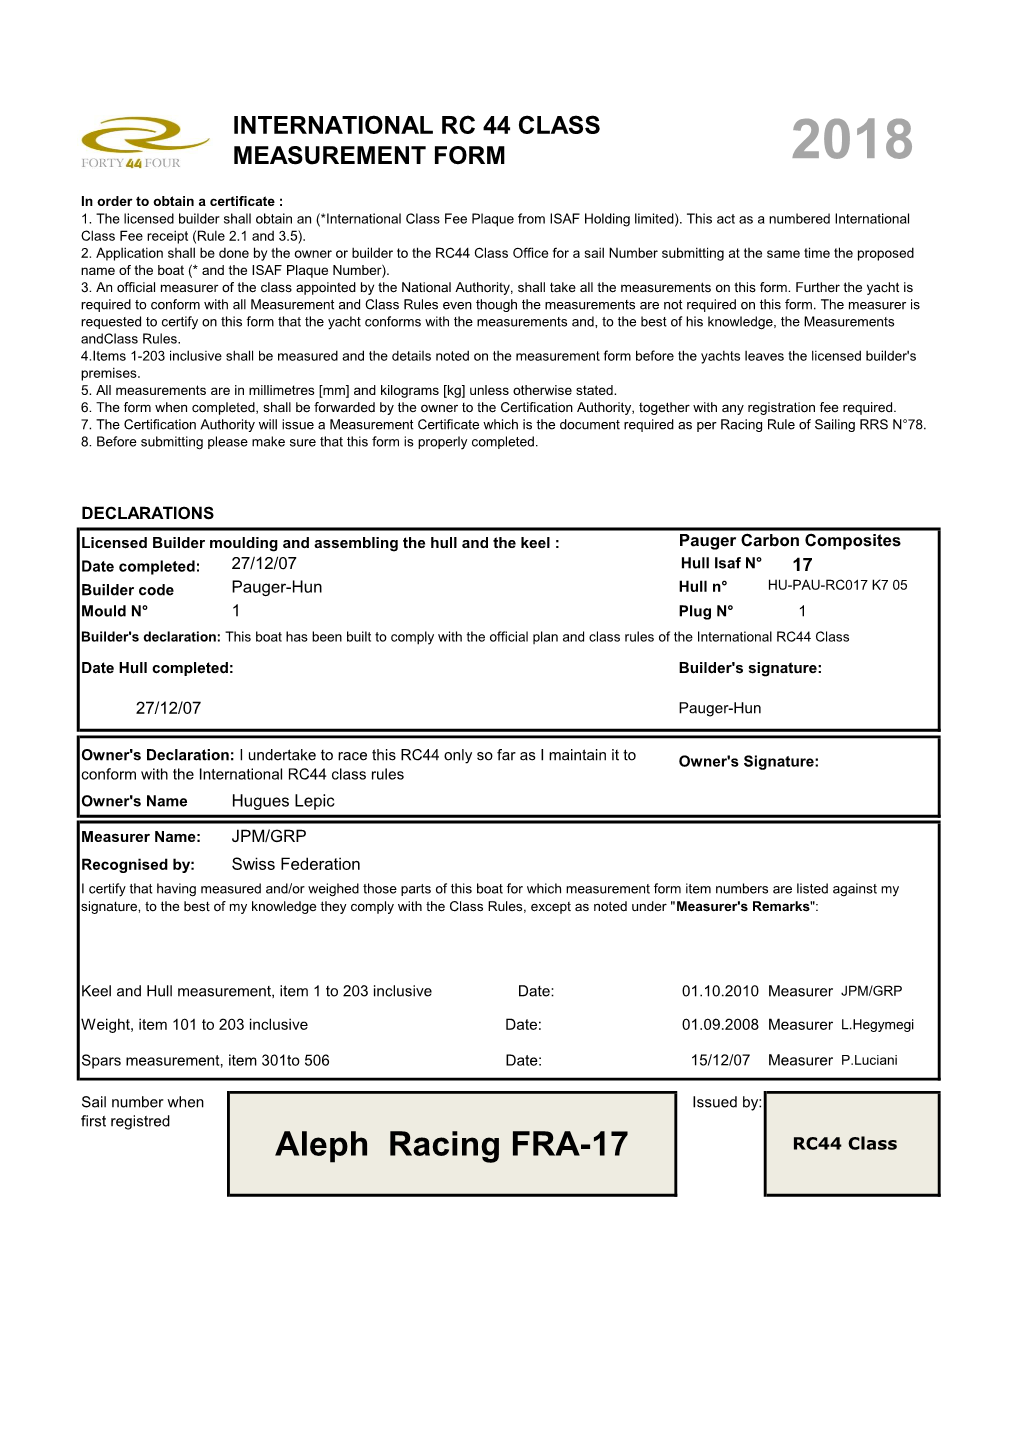 Aleph Racing FRA-17